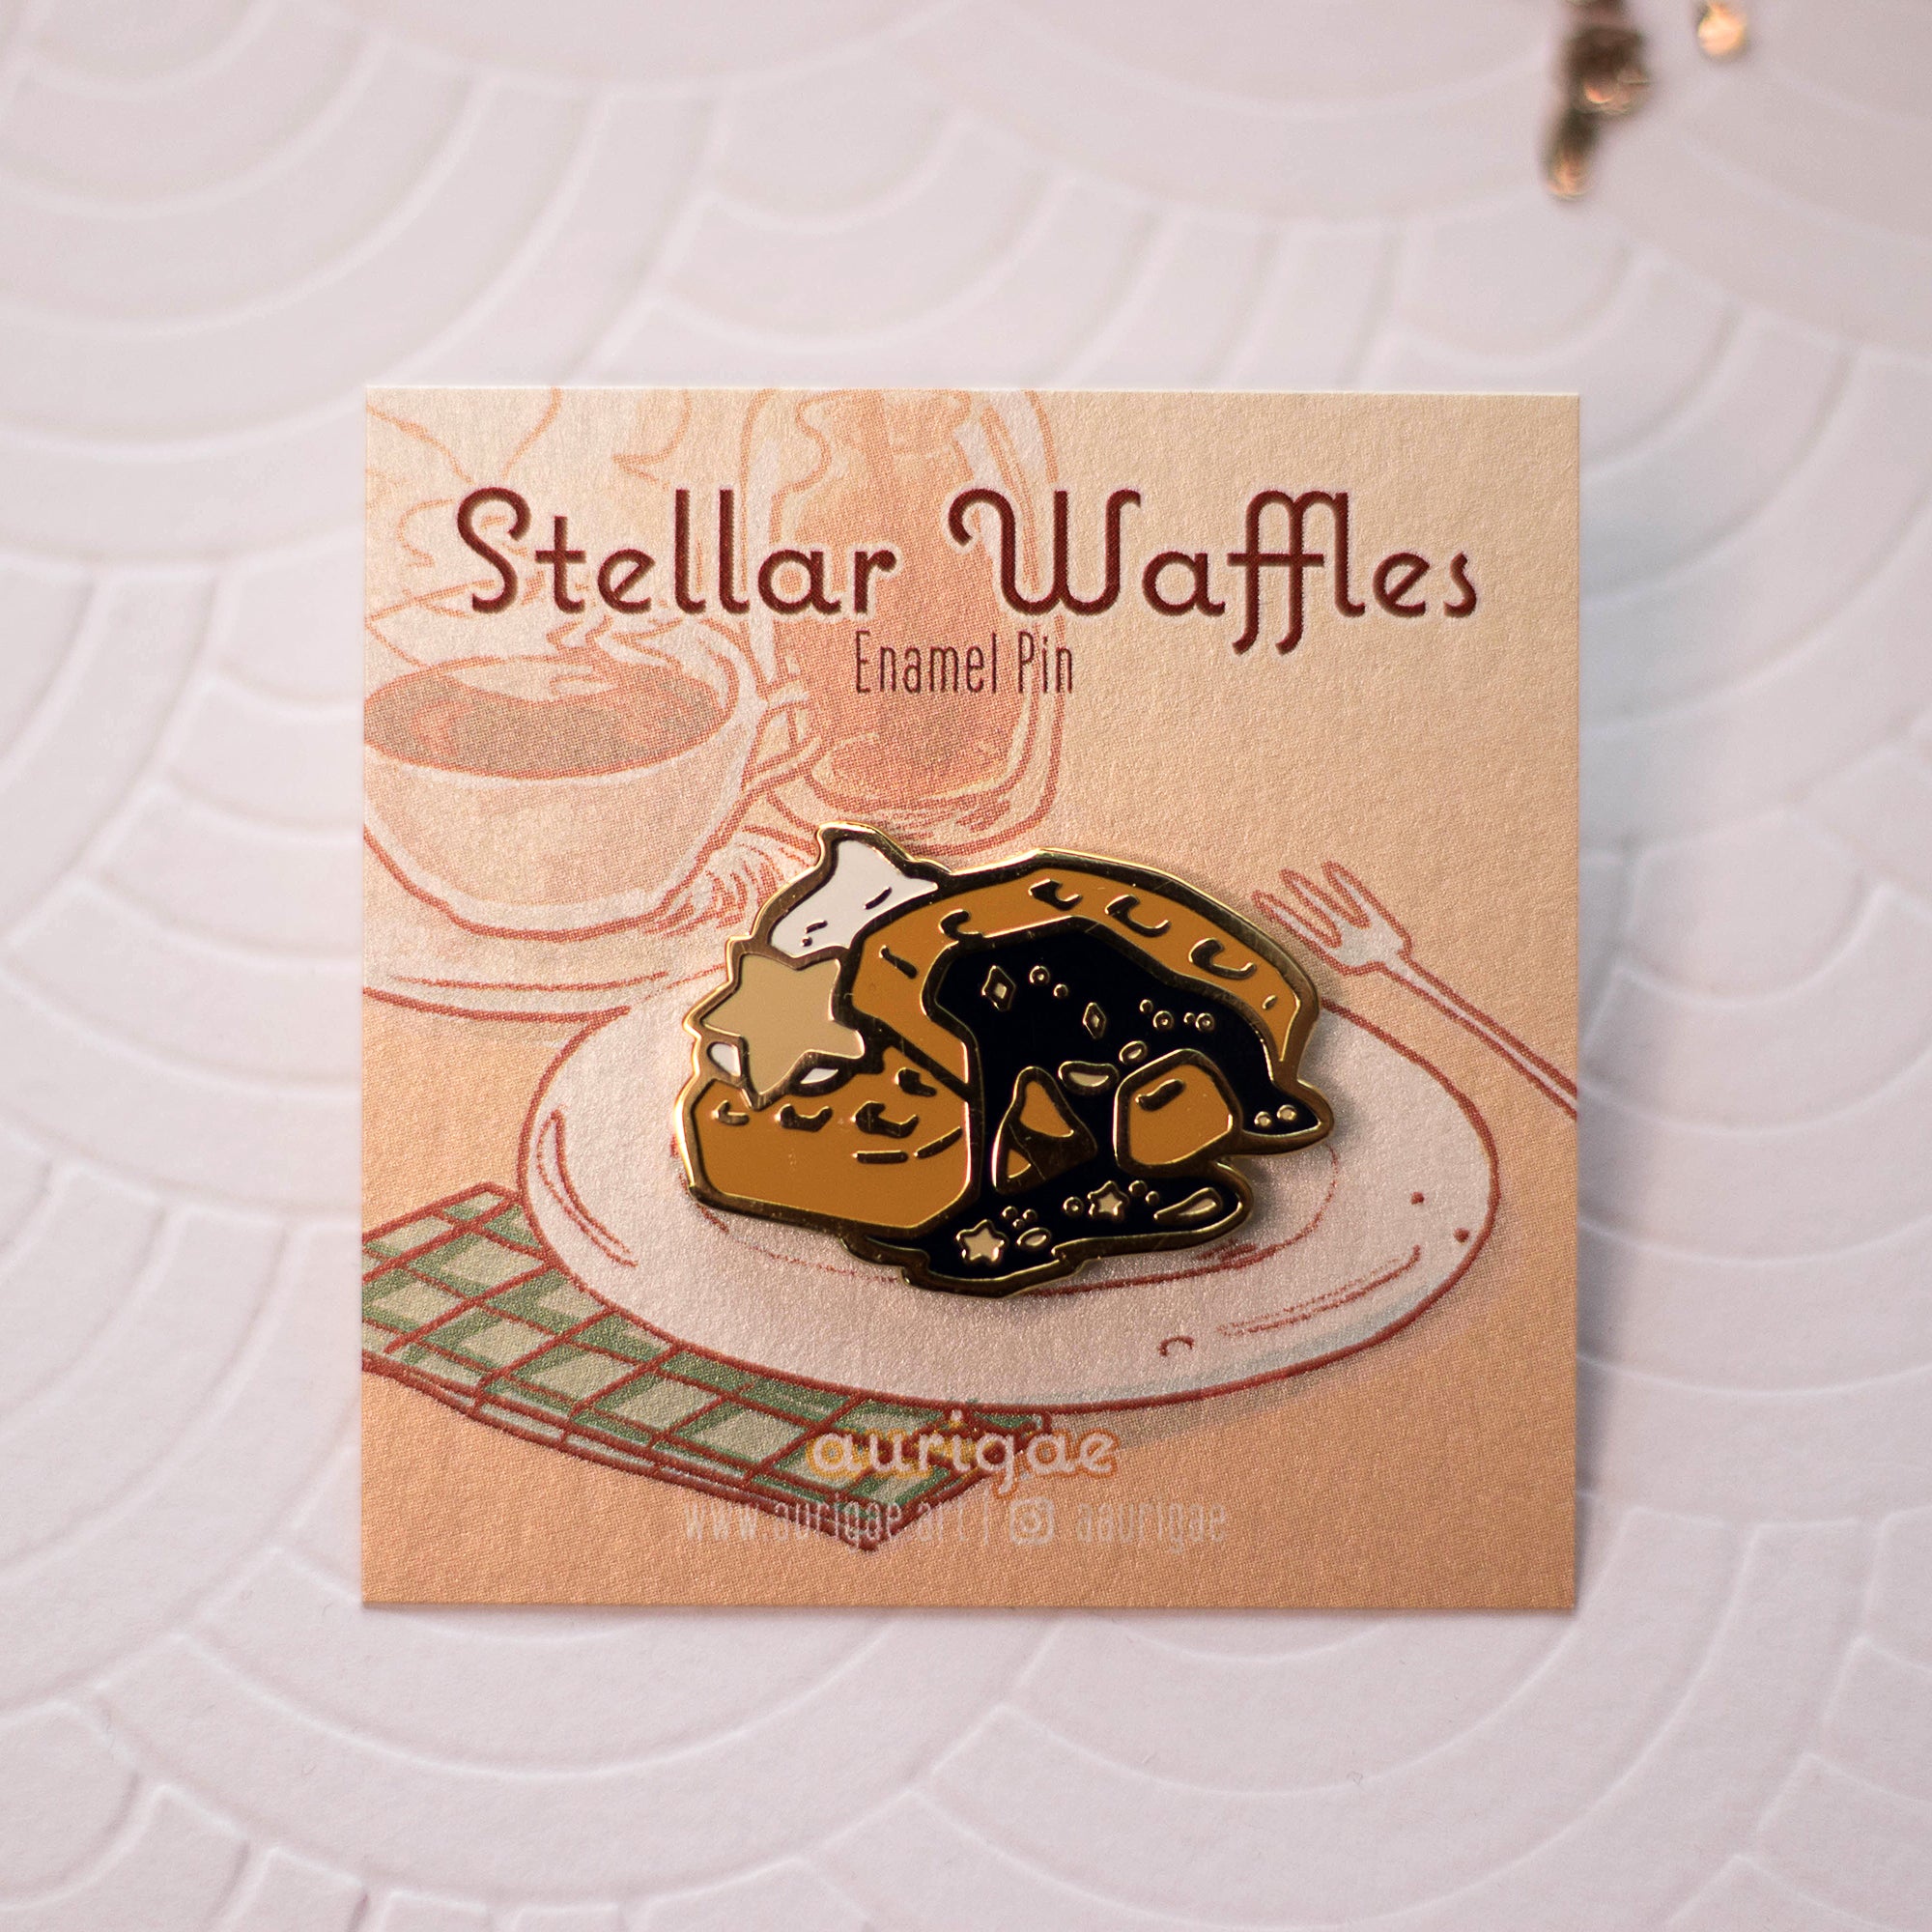 Stellar Waffles | Enamel Pin - Aurigae Art &Illustration